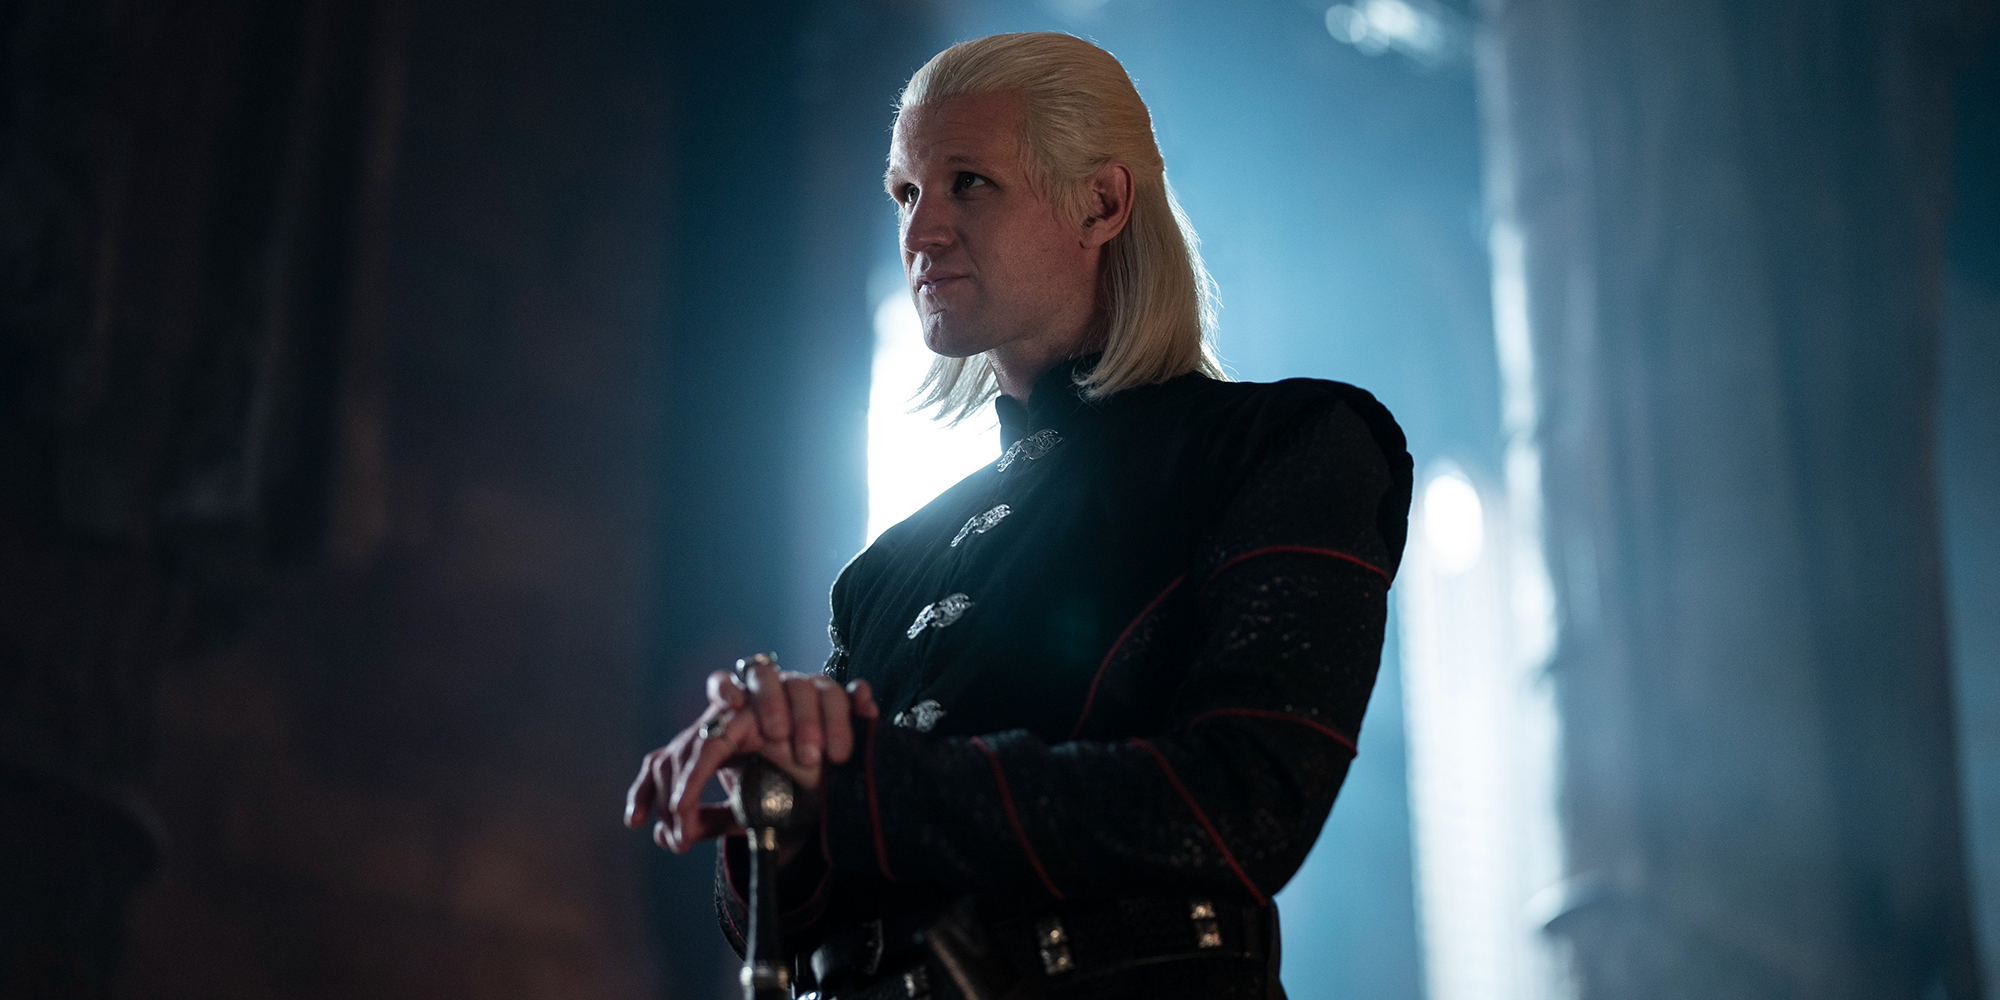 Matt Smith as Daemon Targaryen standing in the Throne Room in Game of Thrones.